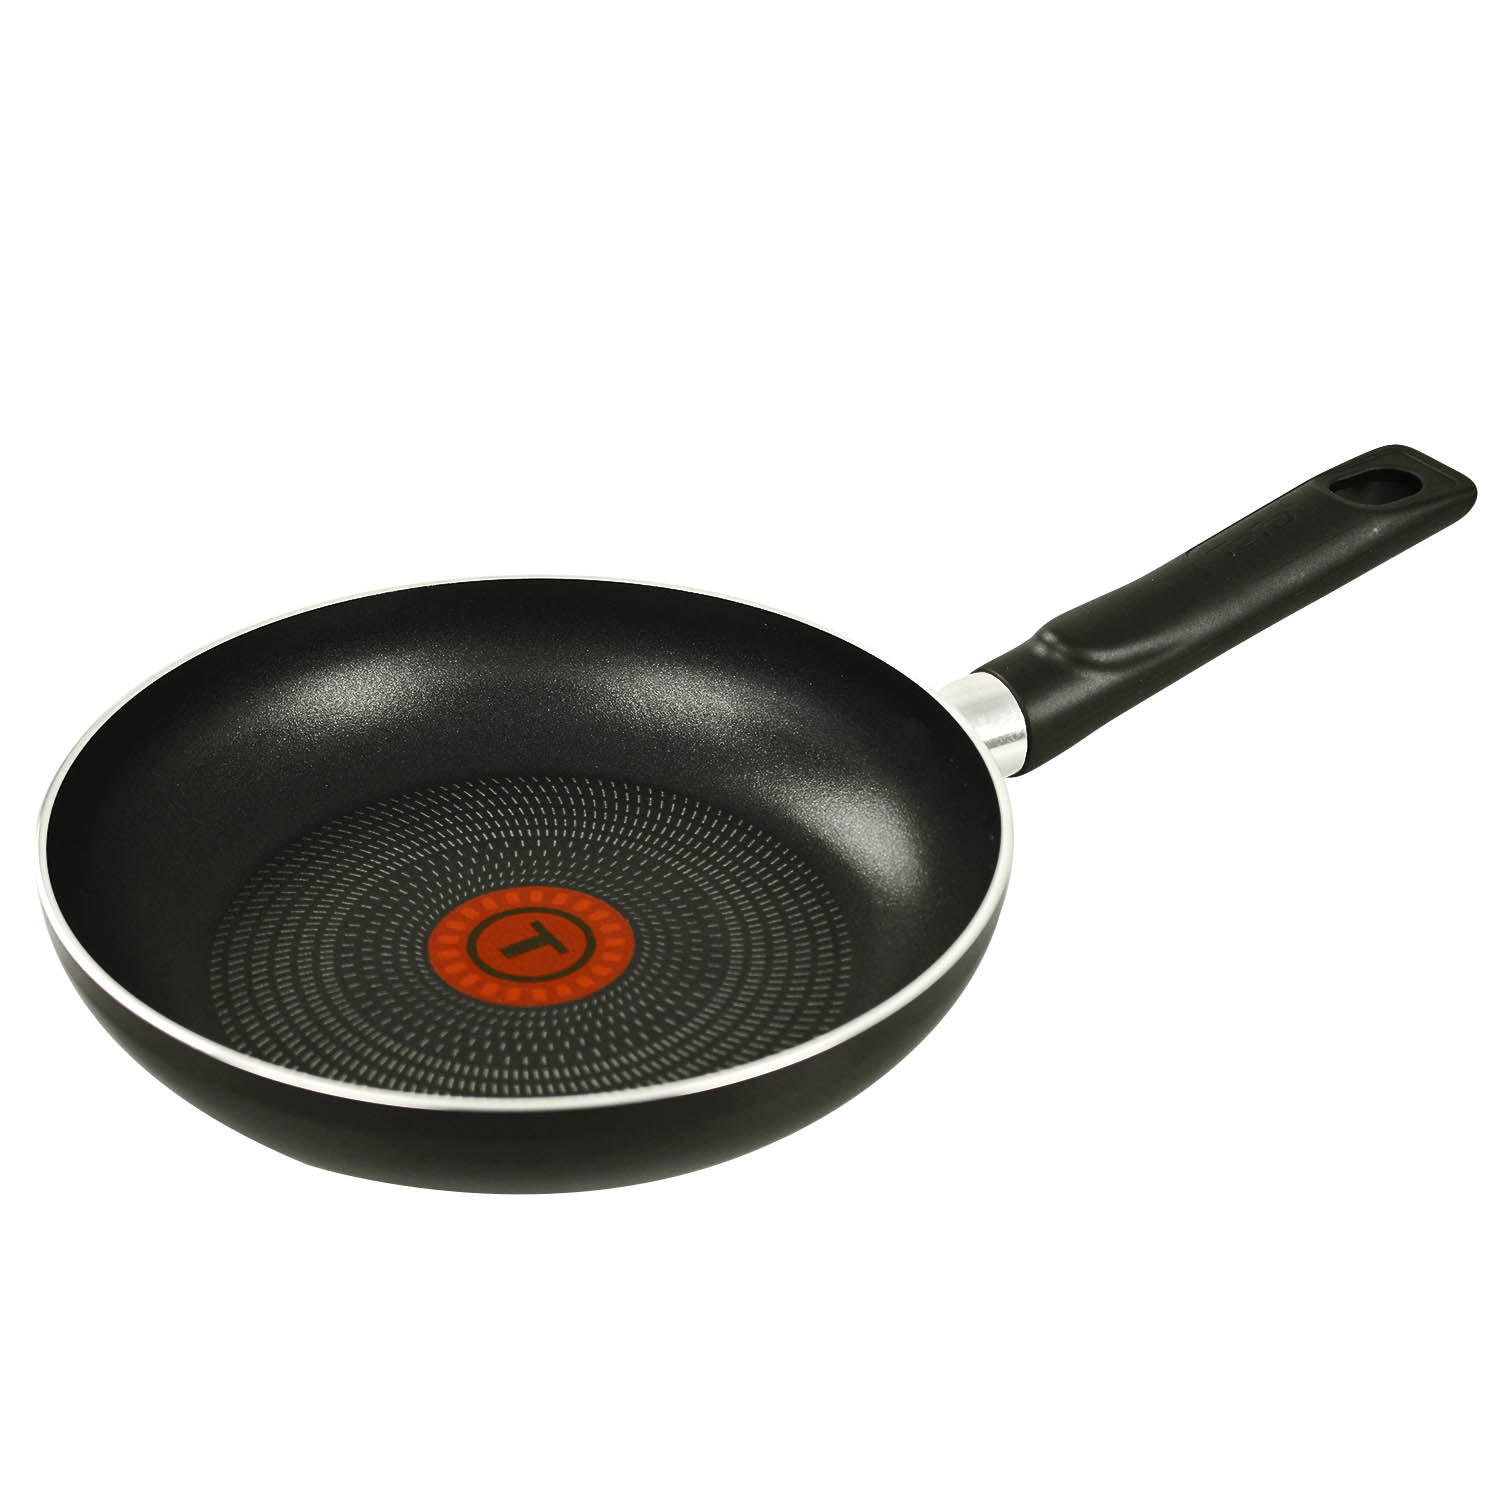 Tefal 26cm Issencia Pro Non-Stick Frying Pan